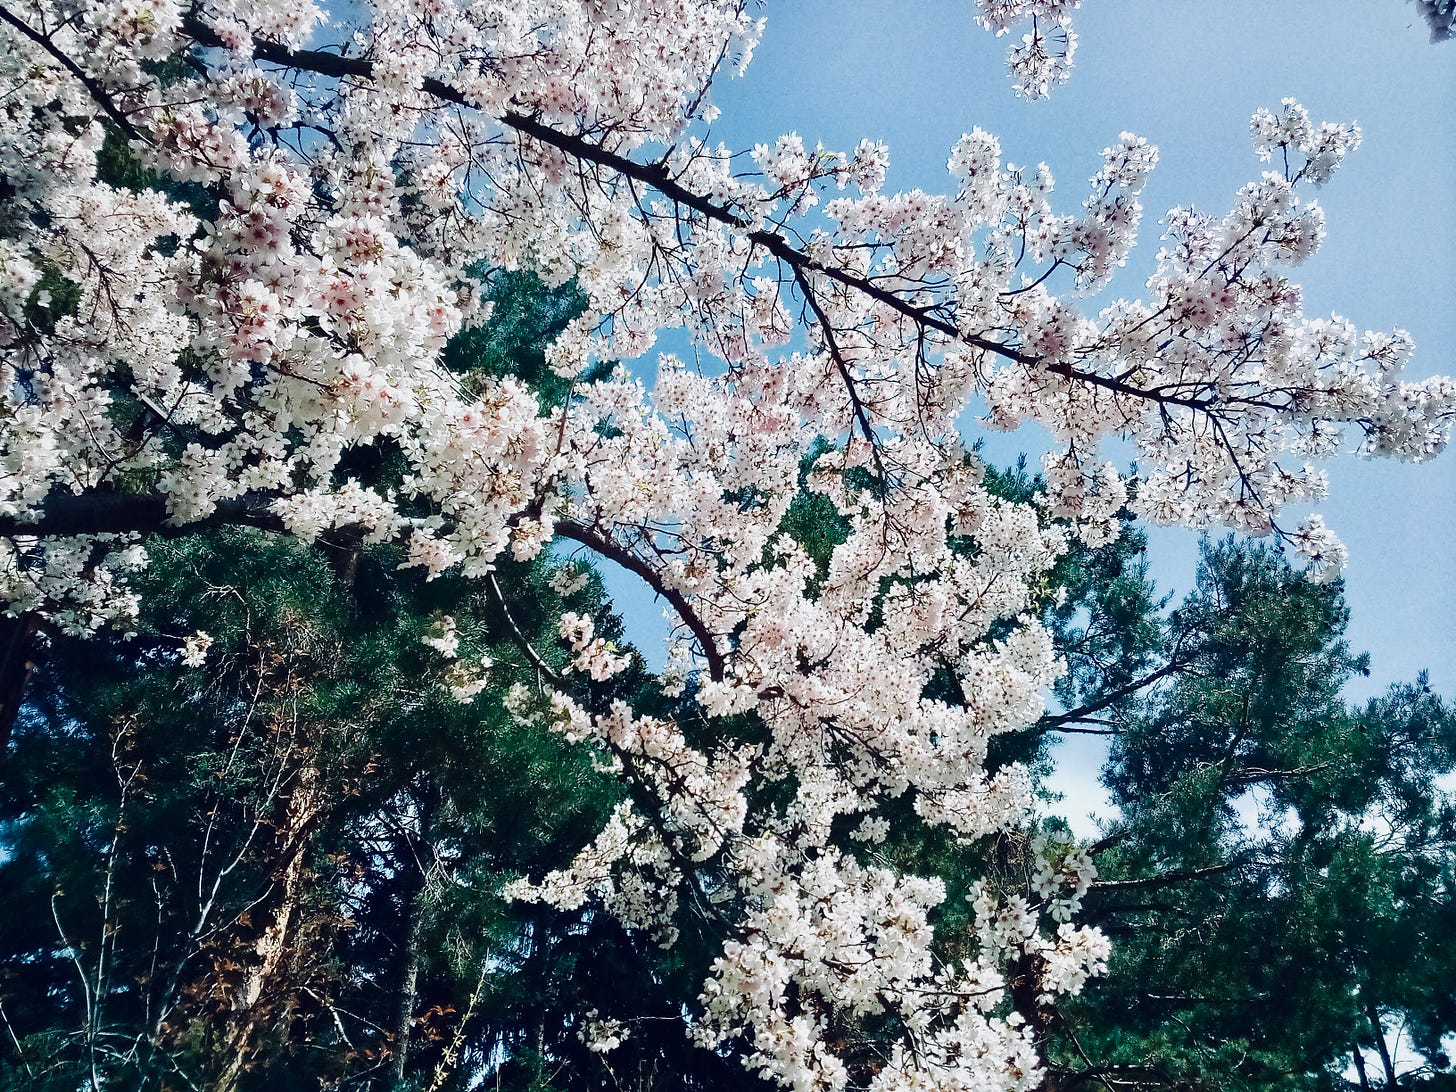 Tree blossoms against blue sky